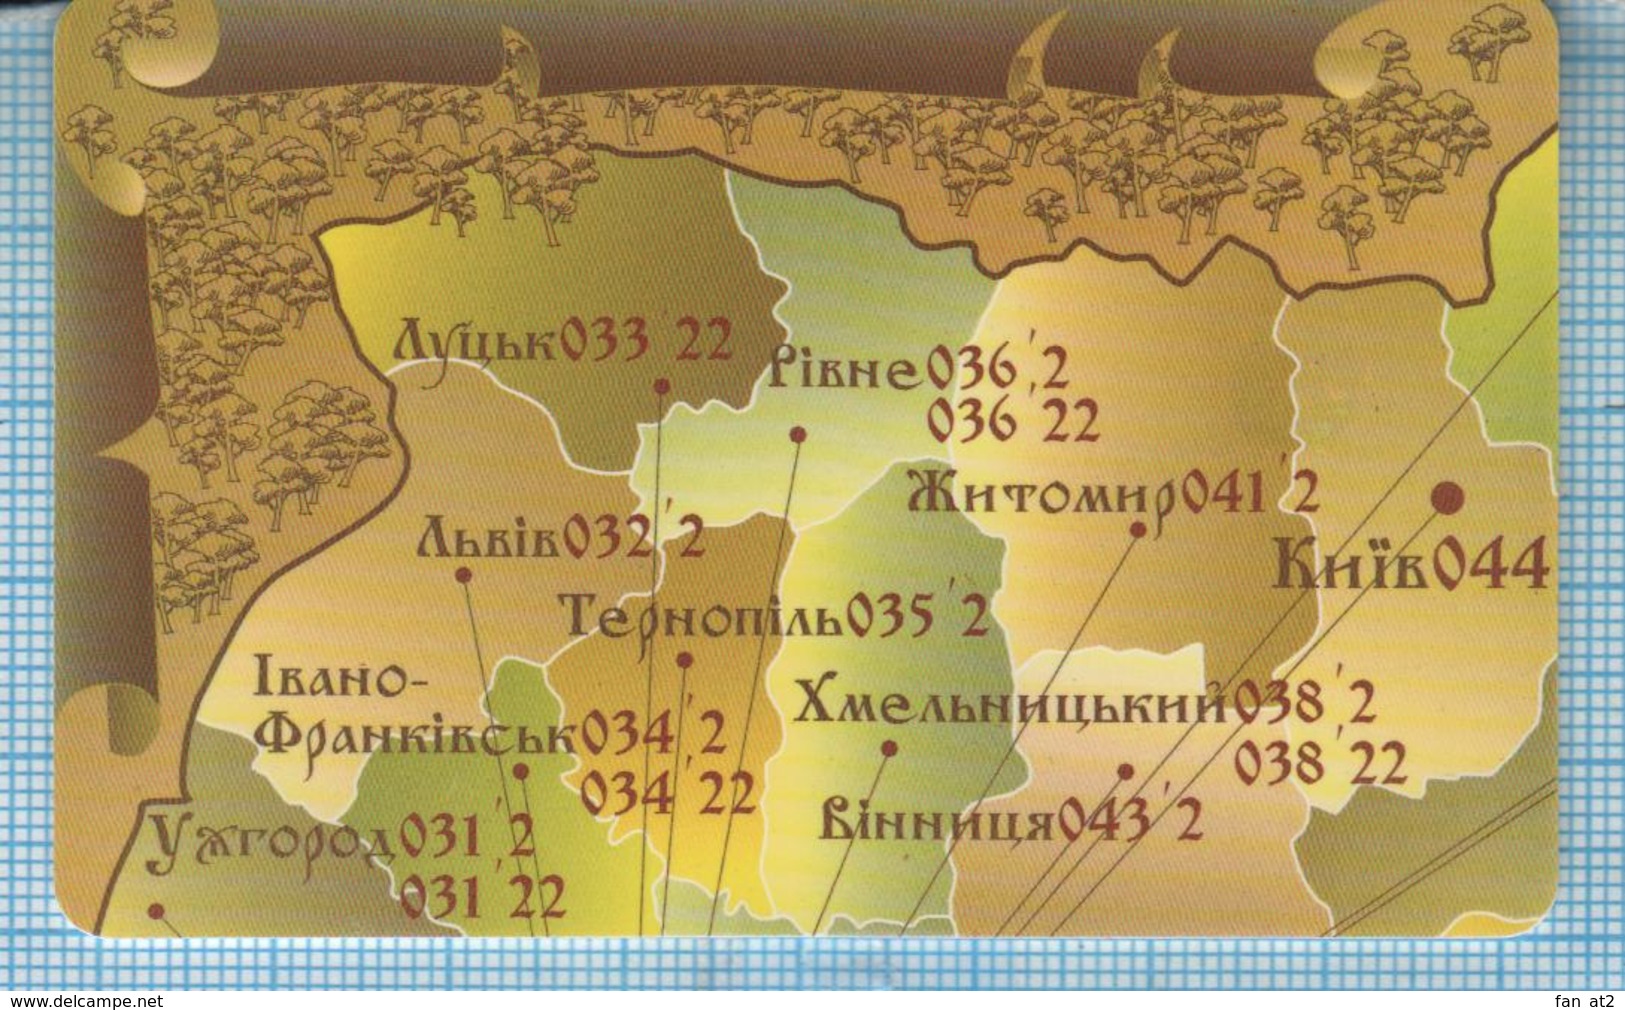 UKRAINE / Phonecard Ukrtelecom / Exhibition Copy. Experimental Card. Map Of Ukraine. One Of The Puzzles. 1999 - Ukraine